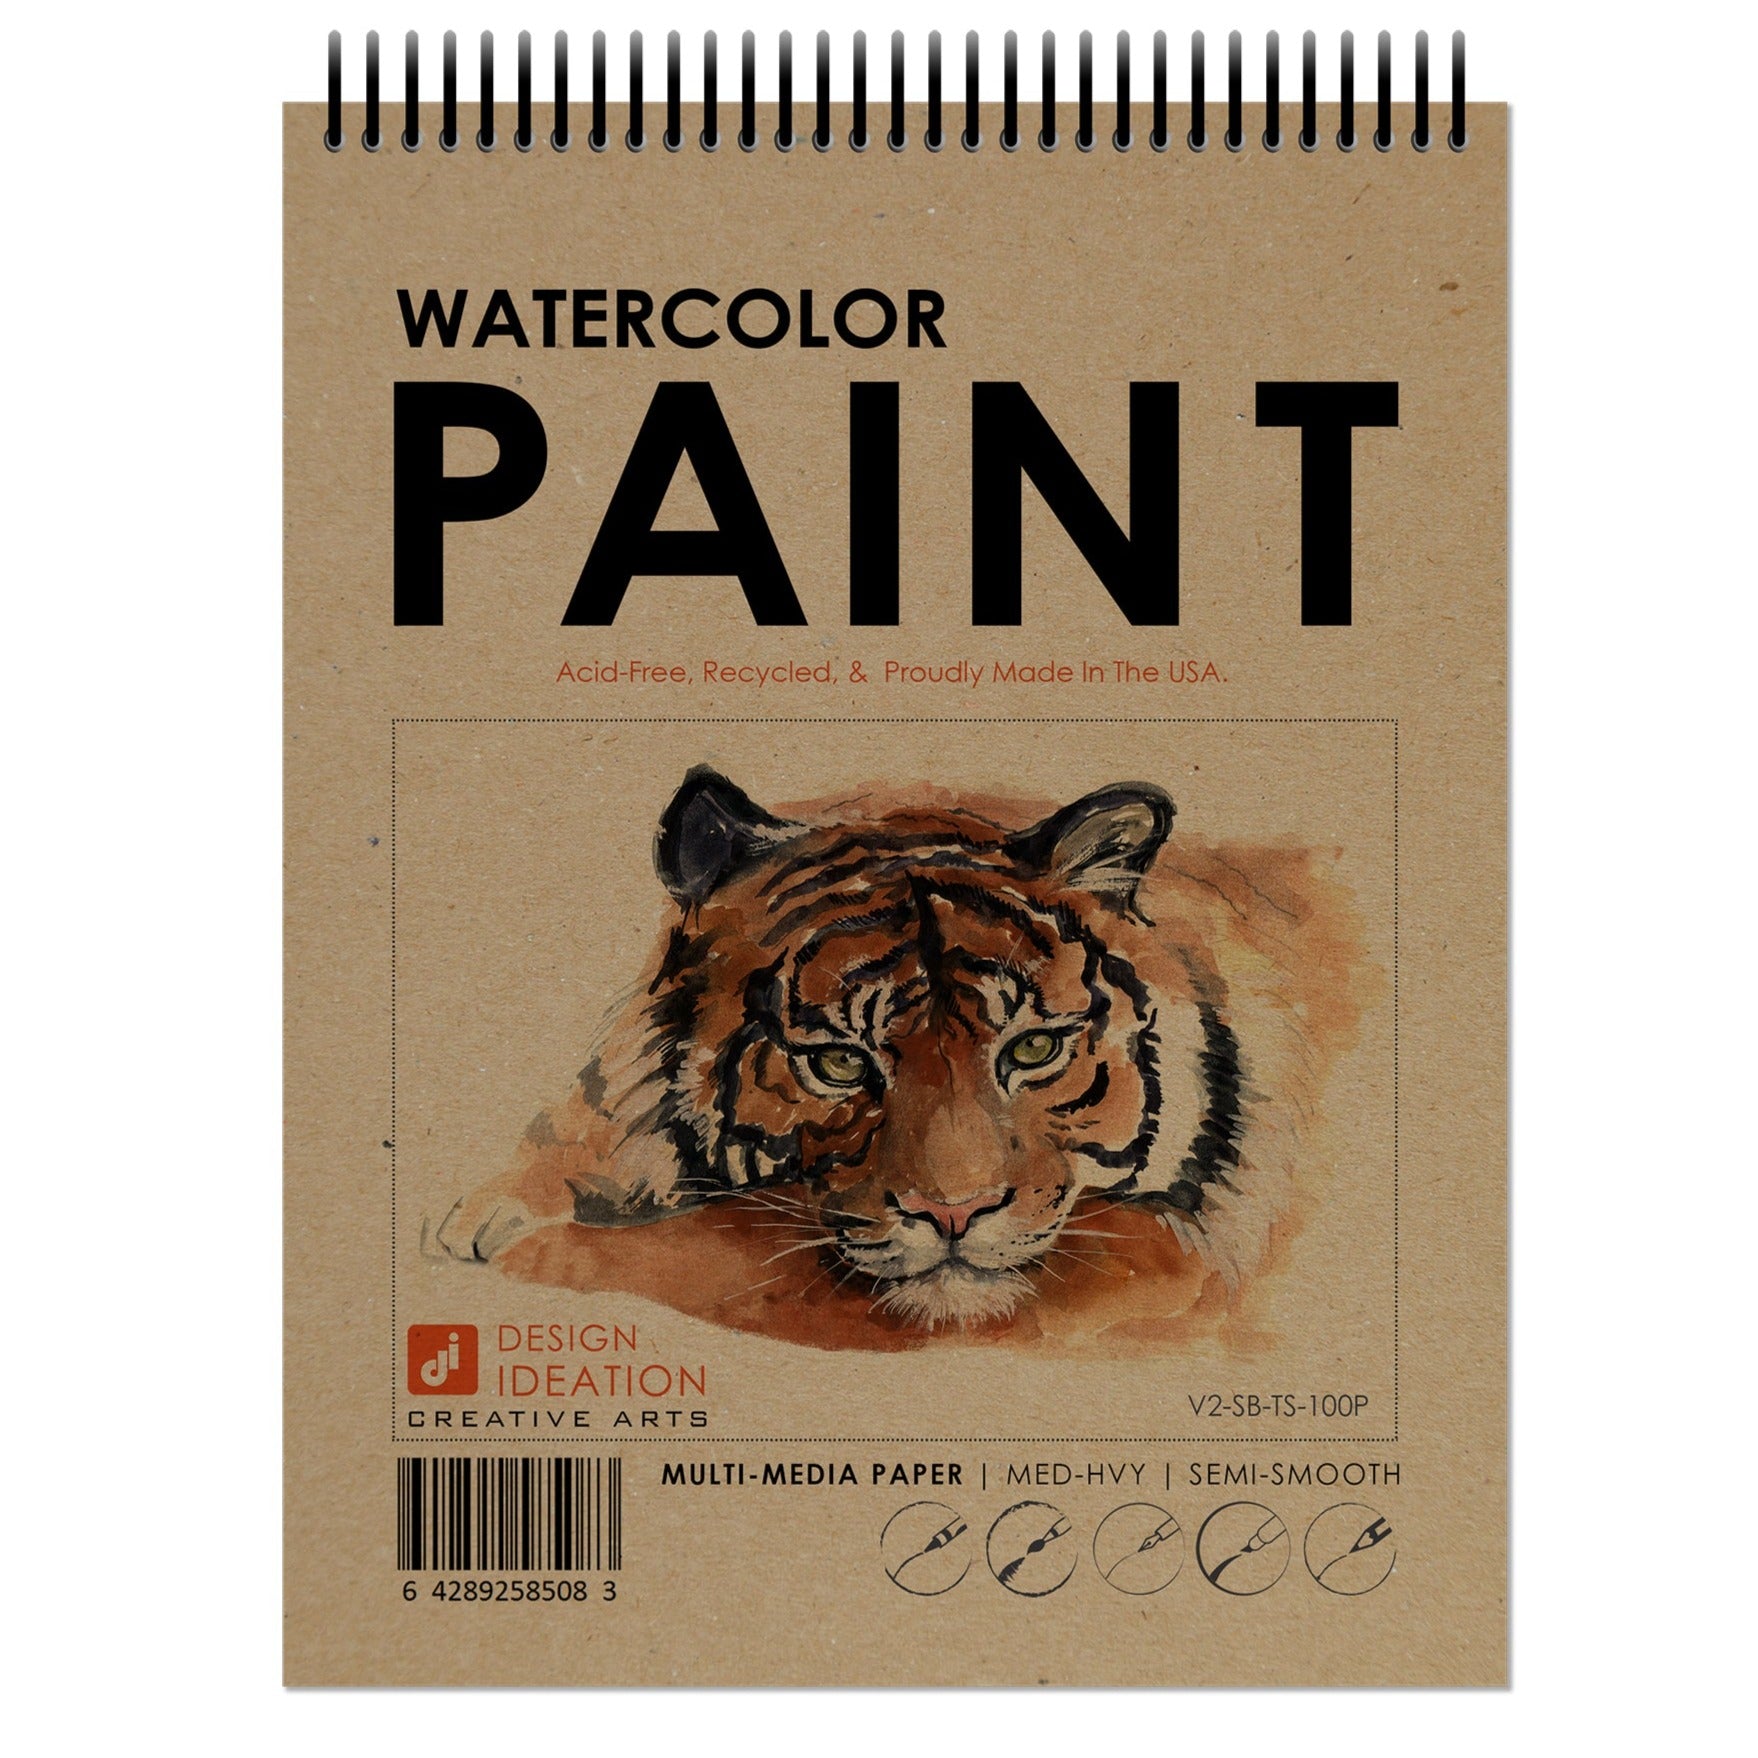 Watercolor Sketchbook [Book]